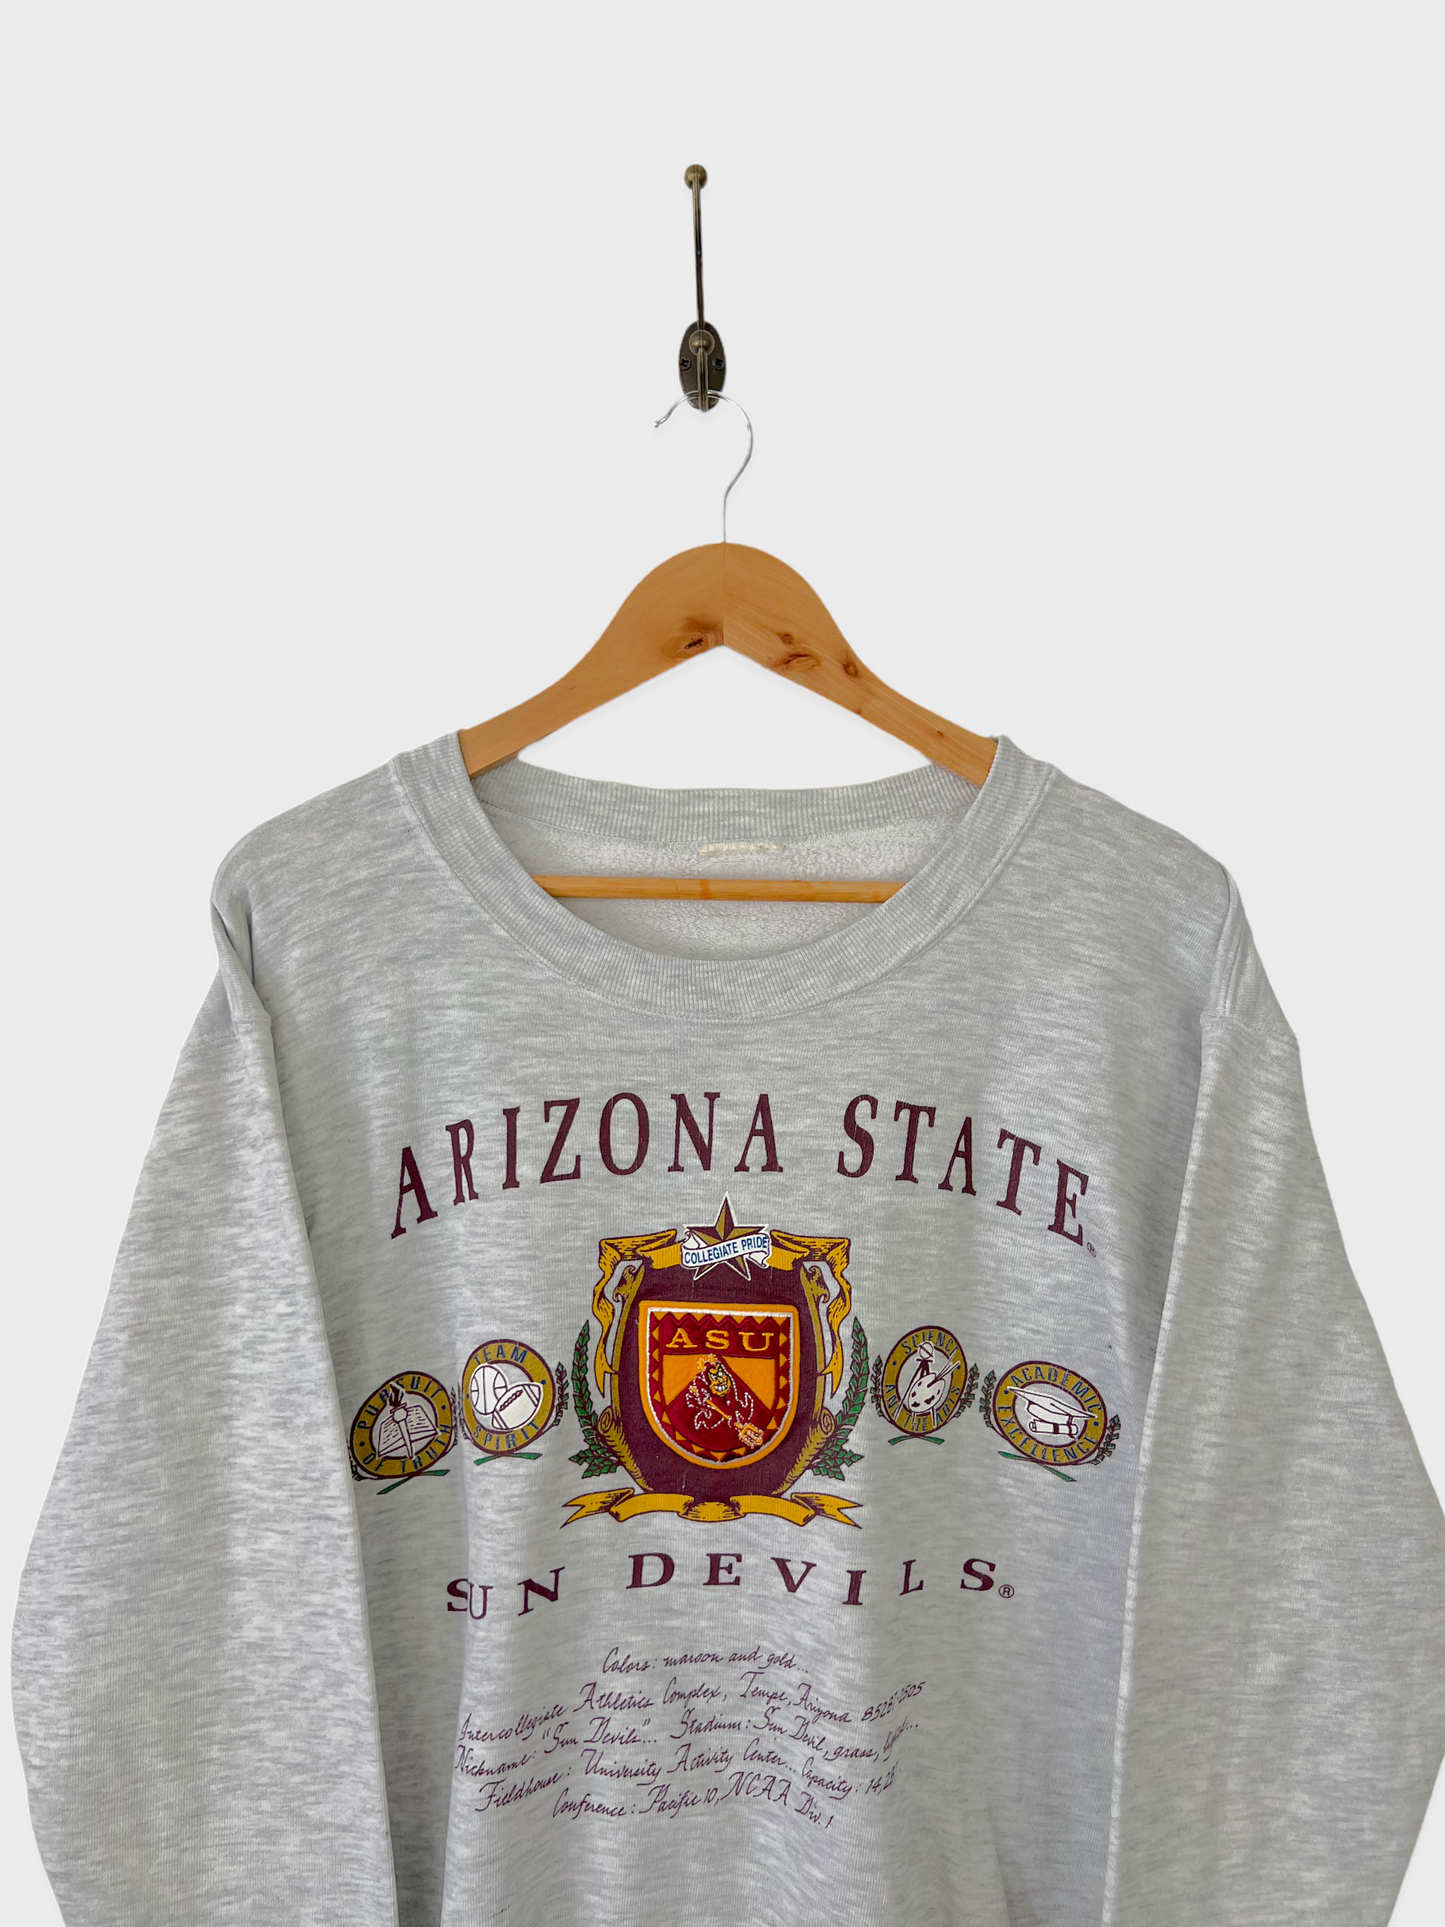 Vintage 90s NCAA ASU Arizona State University Sun Devils 